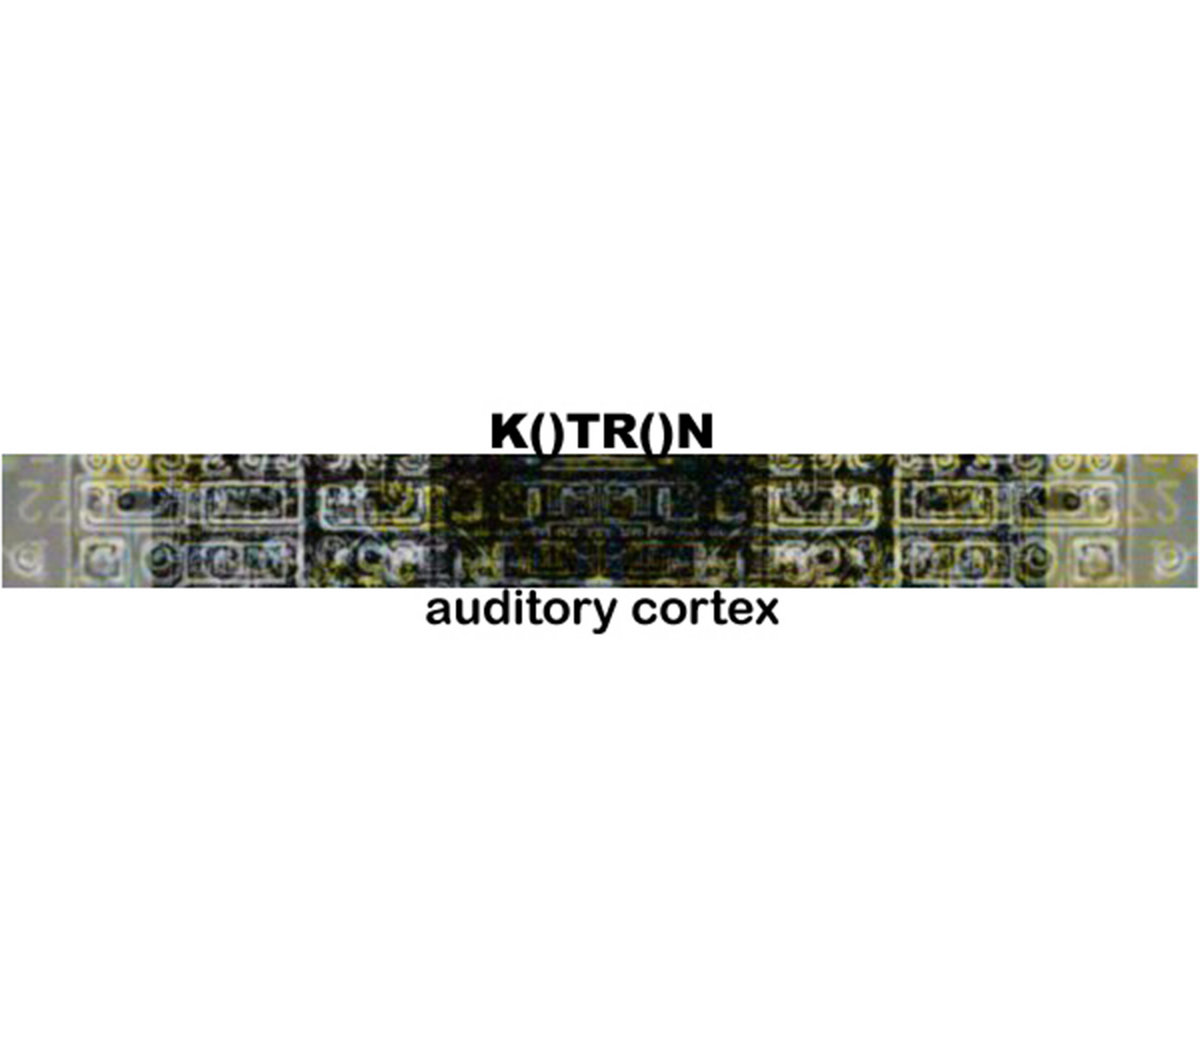 Kotron - auditory cortex - Mikael Madsen